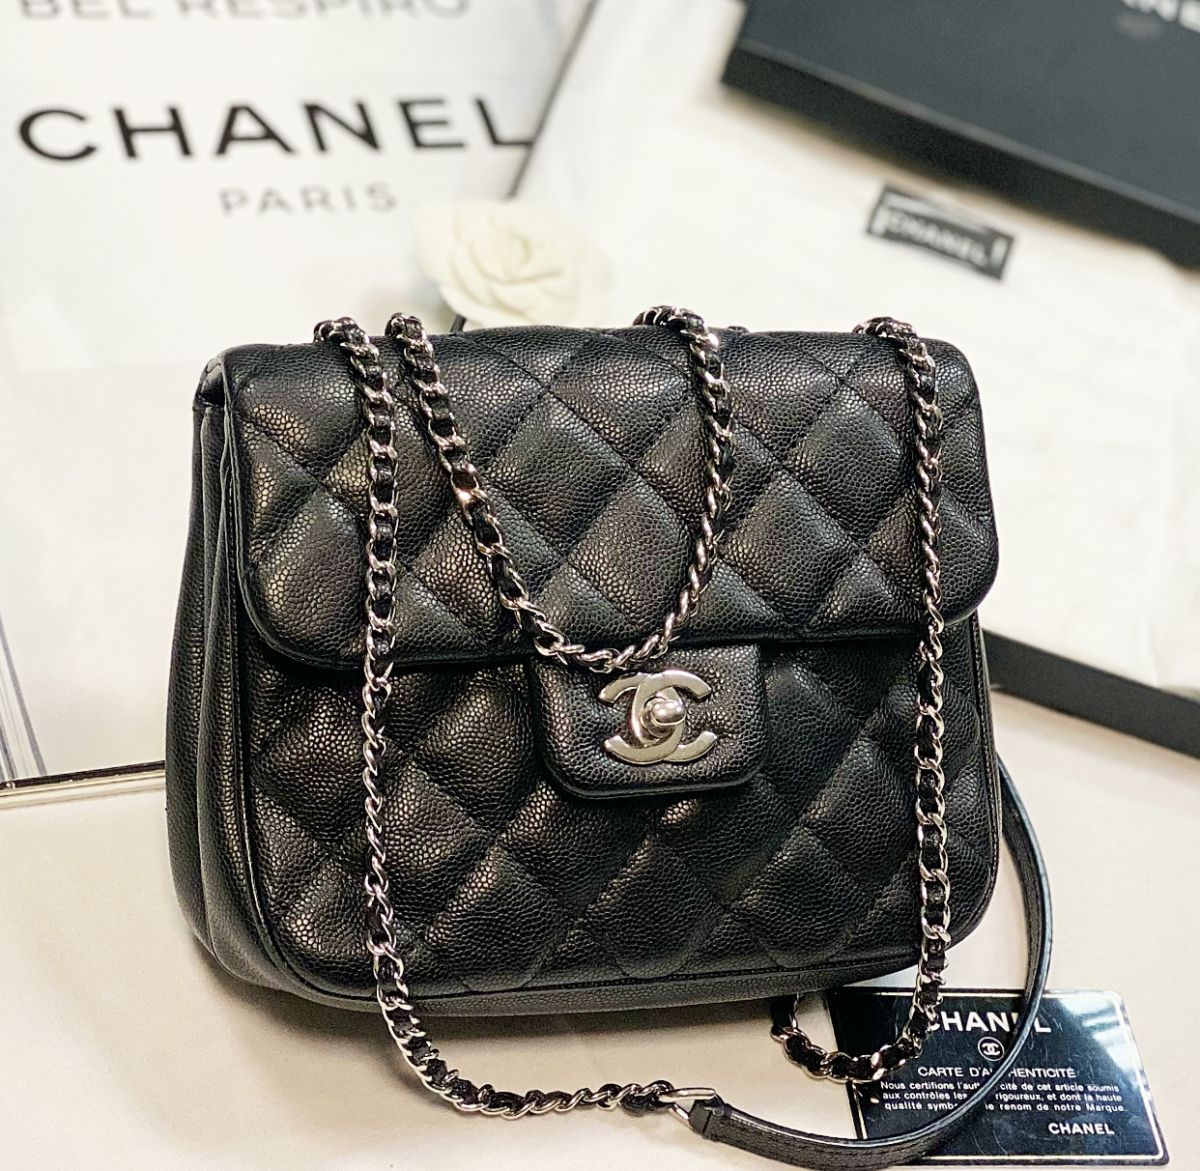 Сумка Chanel размер 20/17 цена 138 463 руб / карточка /